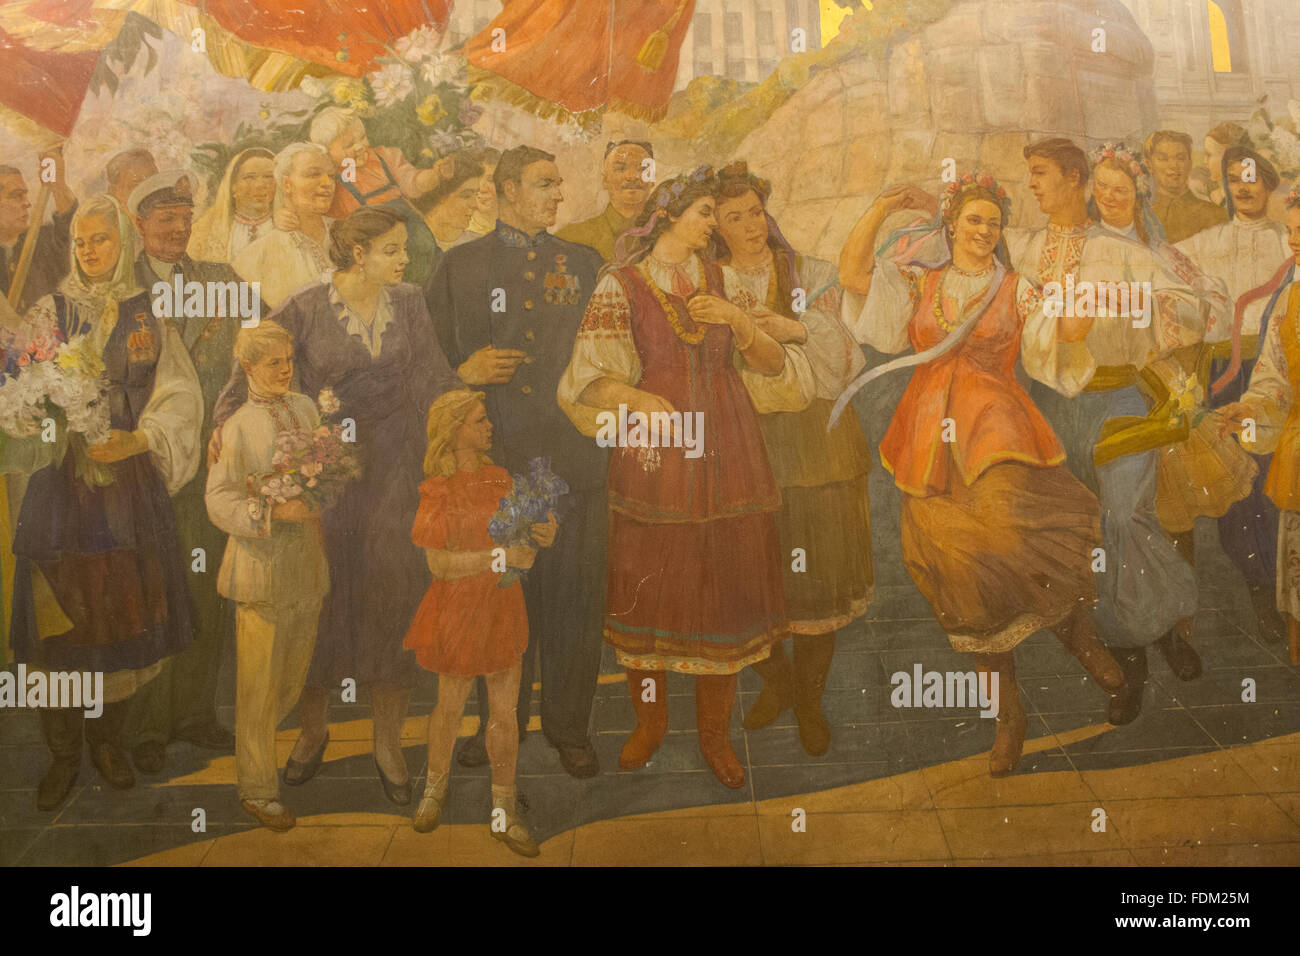 Socialist realist mural depicting a festival in Kiev at Kievskaya metro station platform, Moscow, Russia Stock Photo